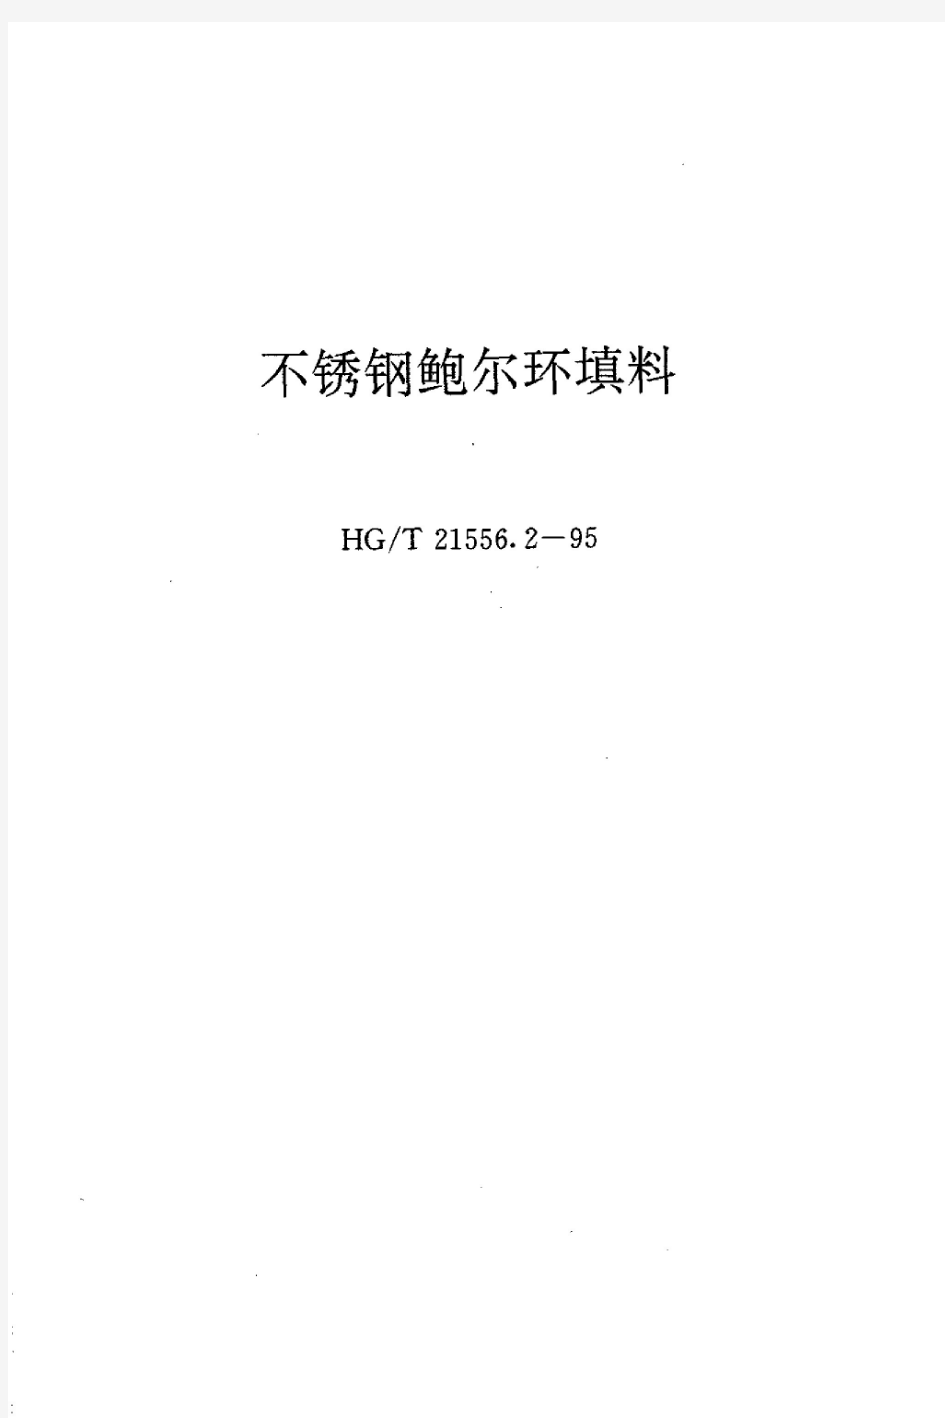 HGT+21556.2-1995+不锈钢鲍尔环填料.pdf